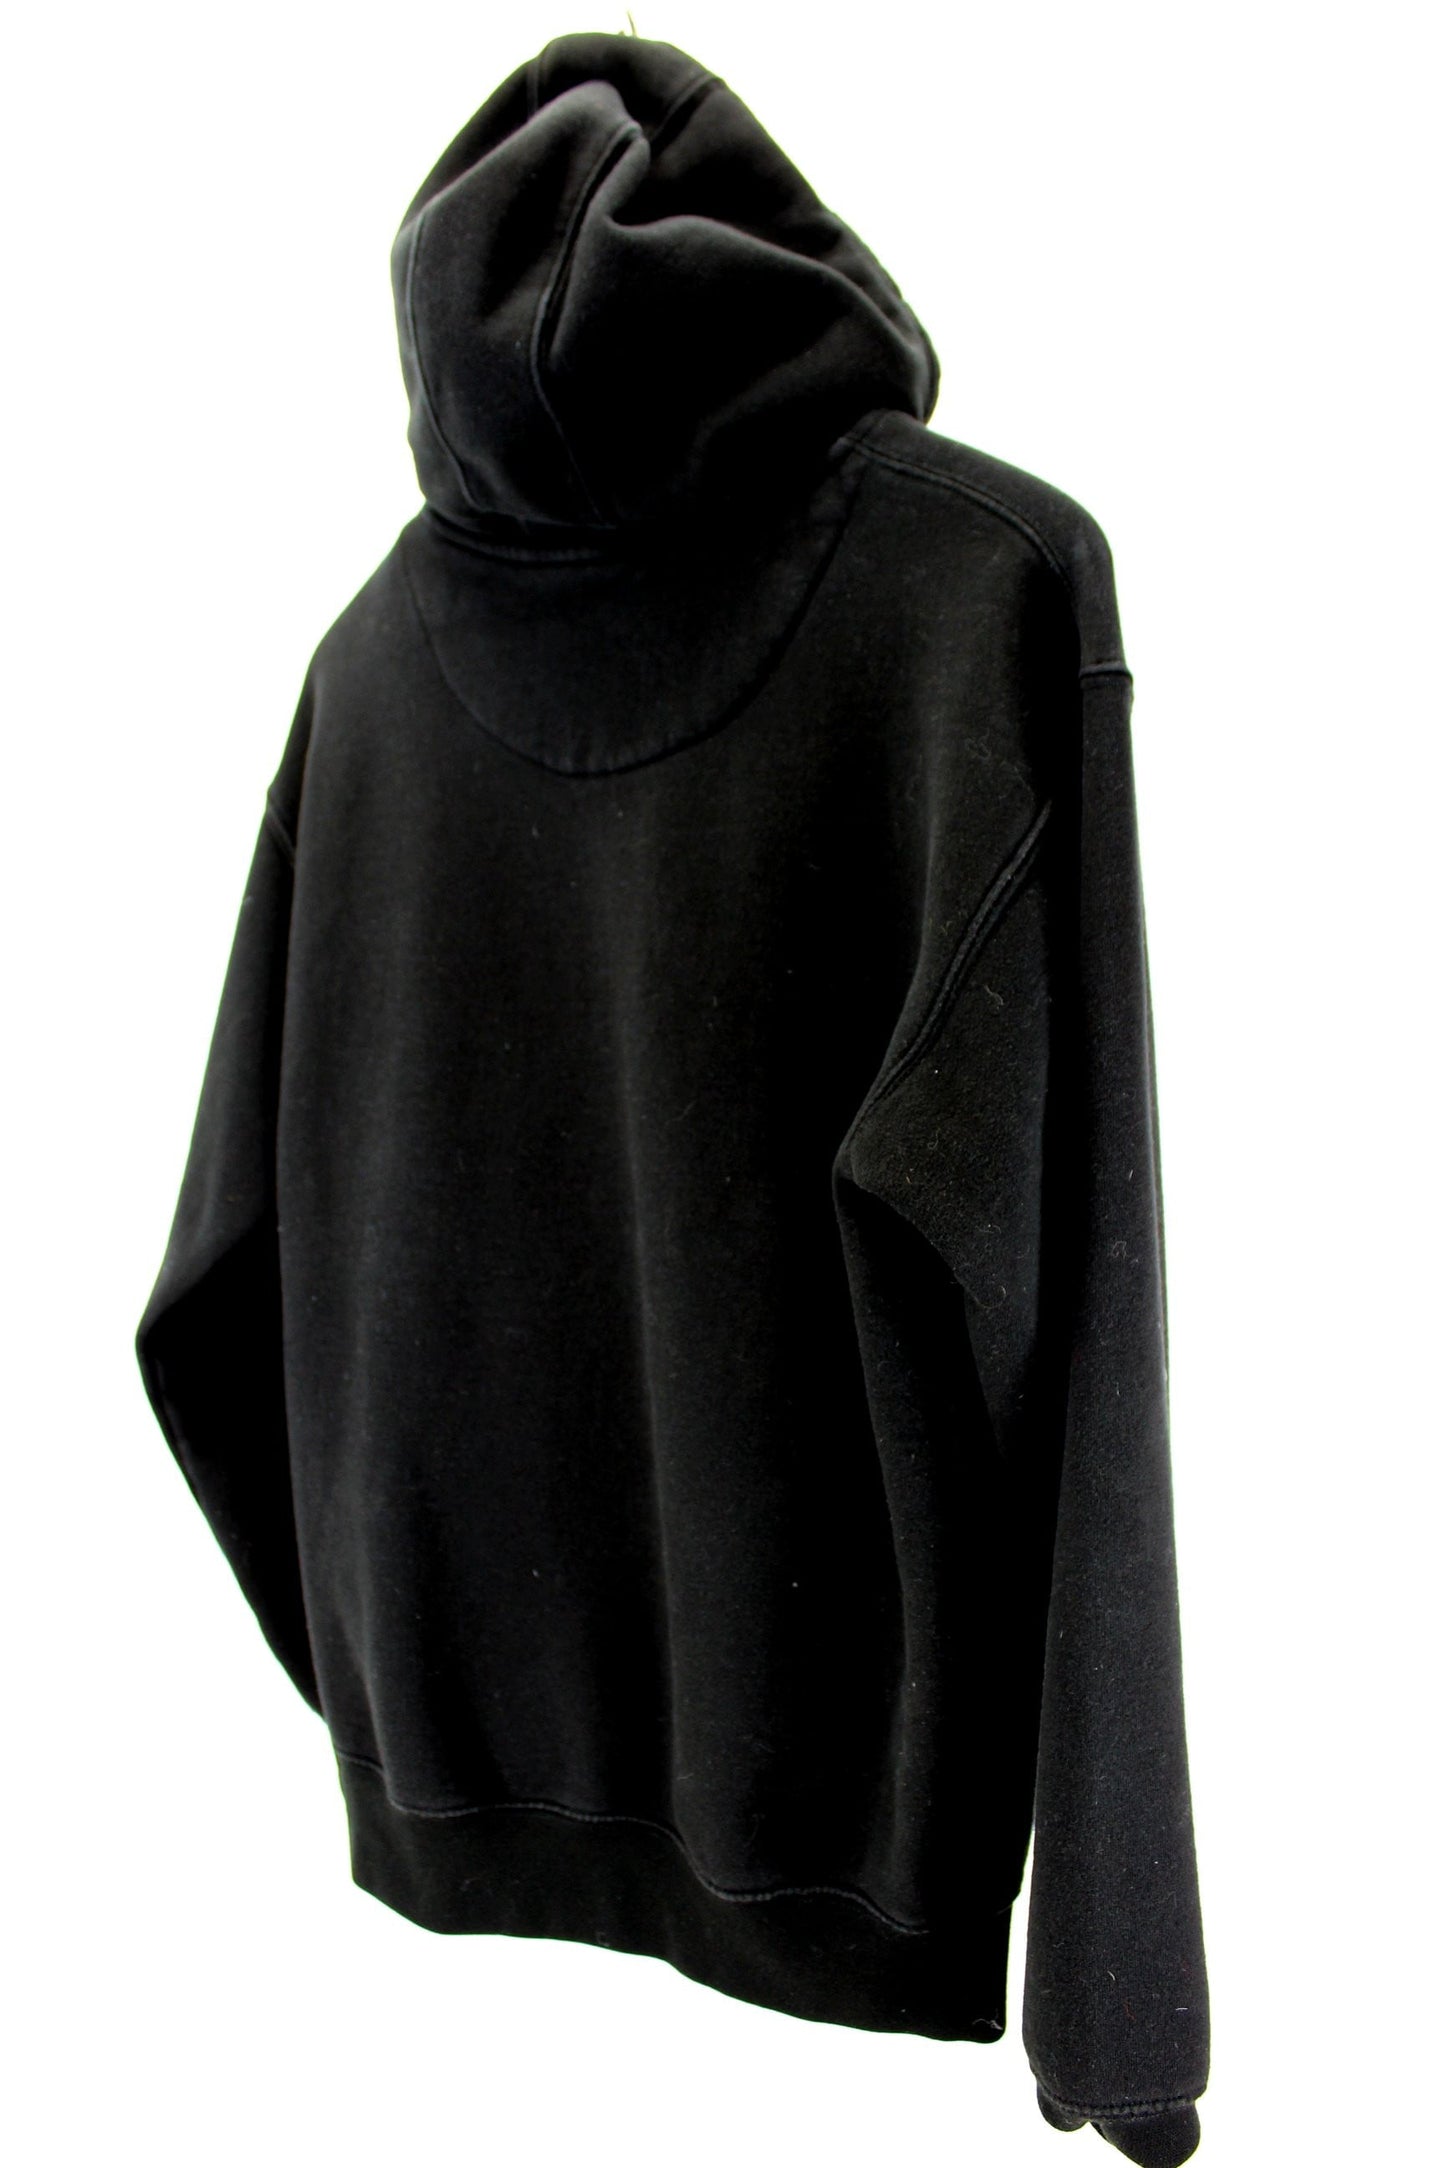 Las Vegas Raiders Sparkly Hoodie Sweatshirt - Pro BP Black Cotton Poly great condition